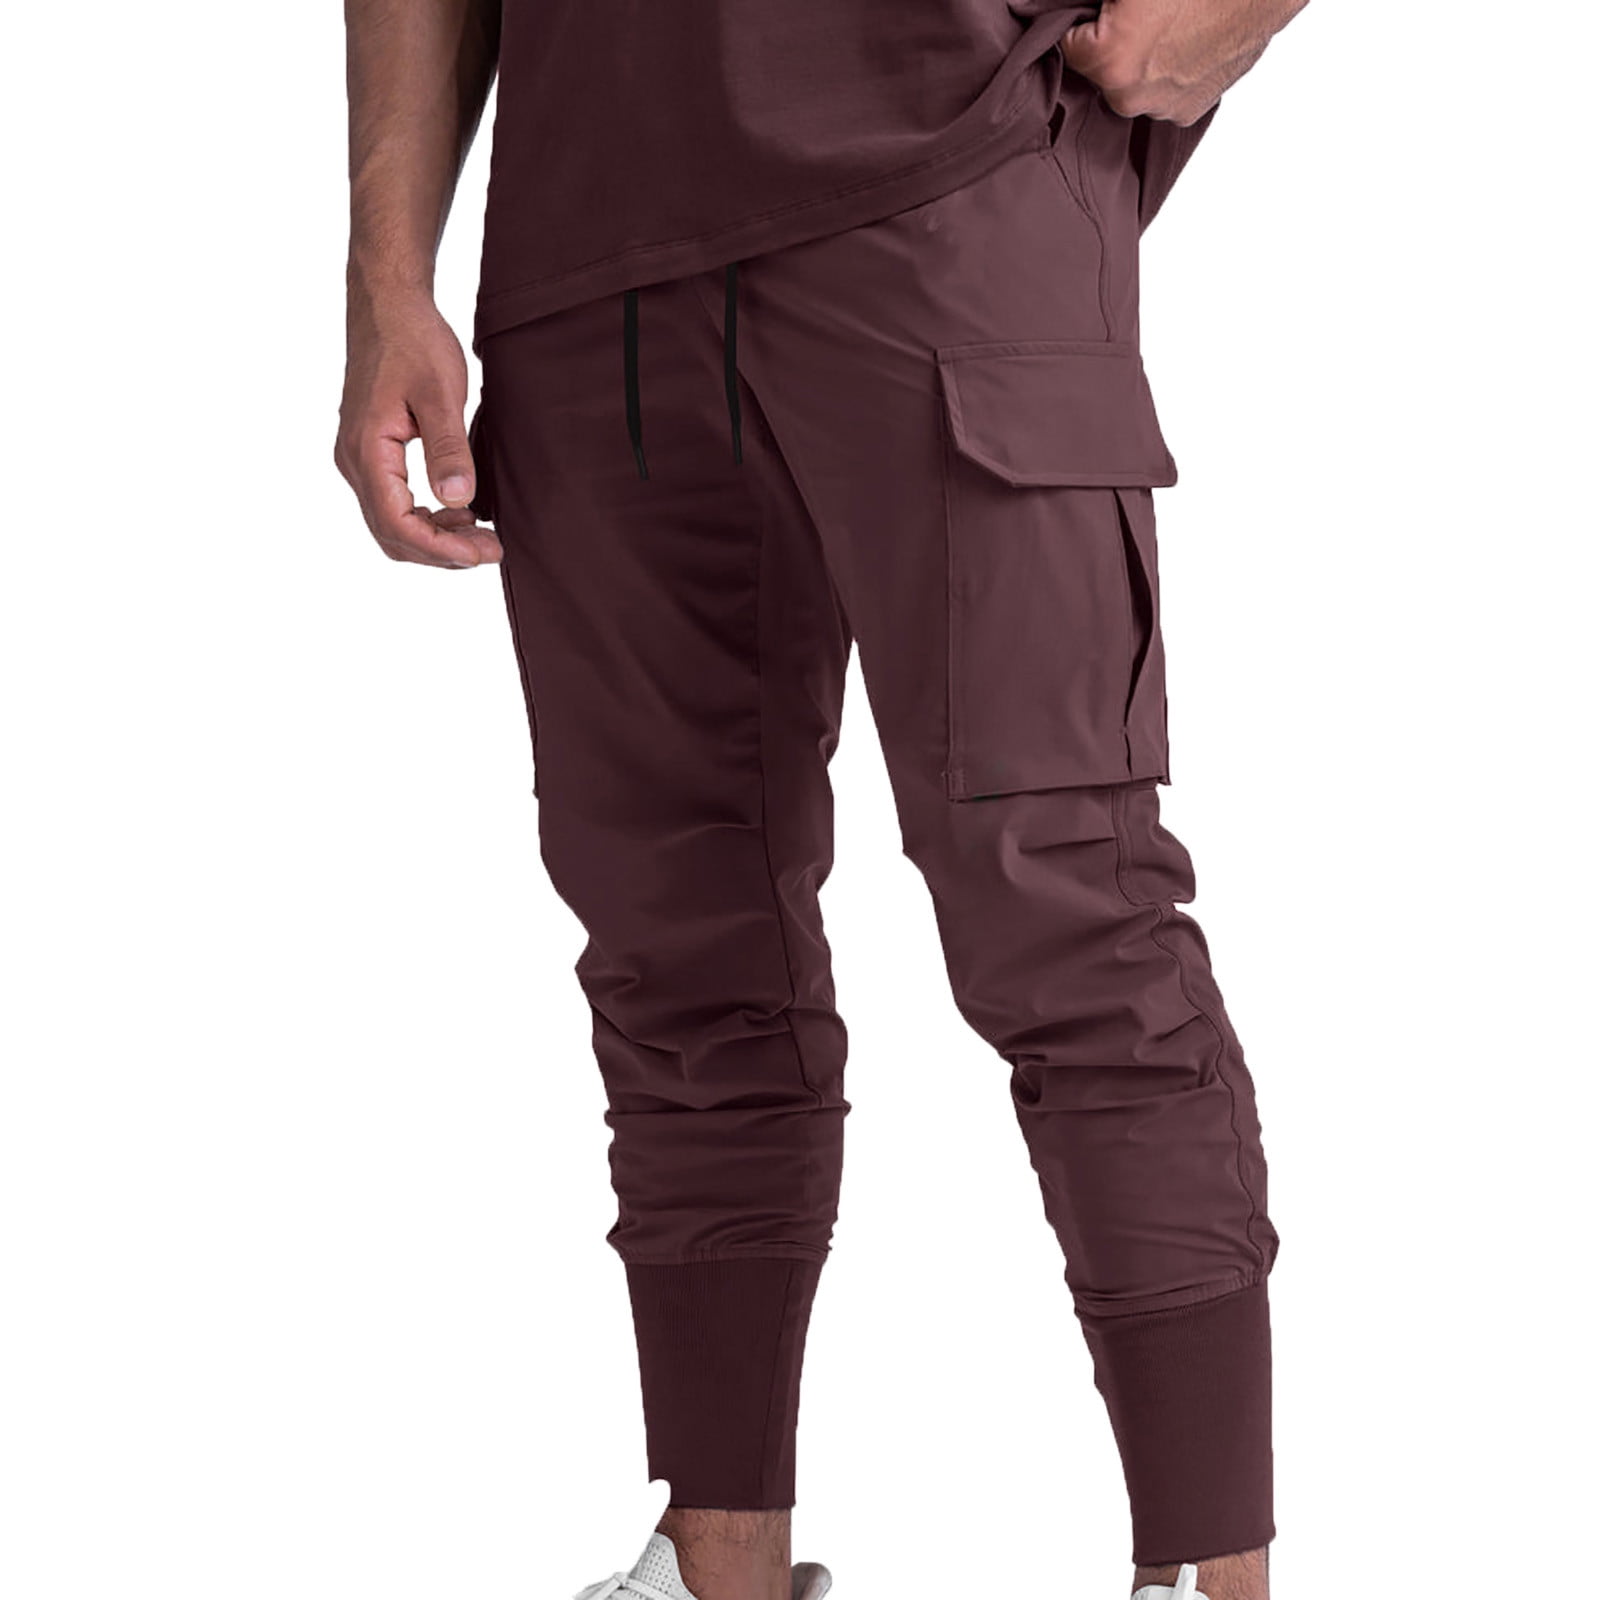 Hfyihgf Men's Sweatpant Camouflage Tactical Pants Waterproof Lightweight  Ripstop Outdoor Hiking Tapered Cargo Pants(Wine,L)